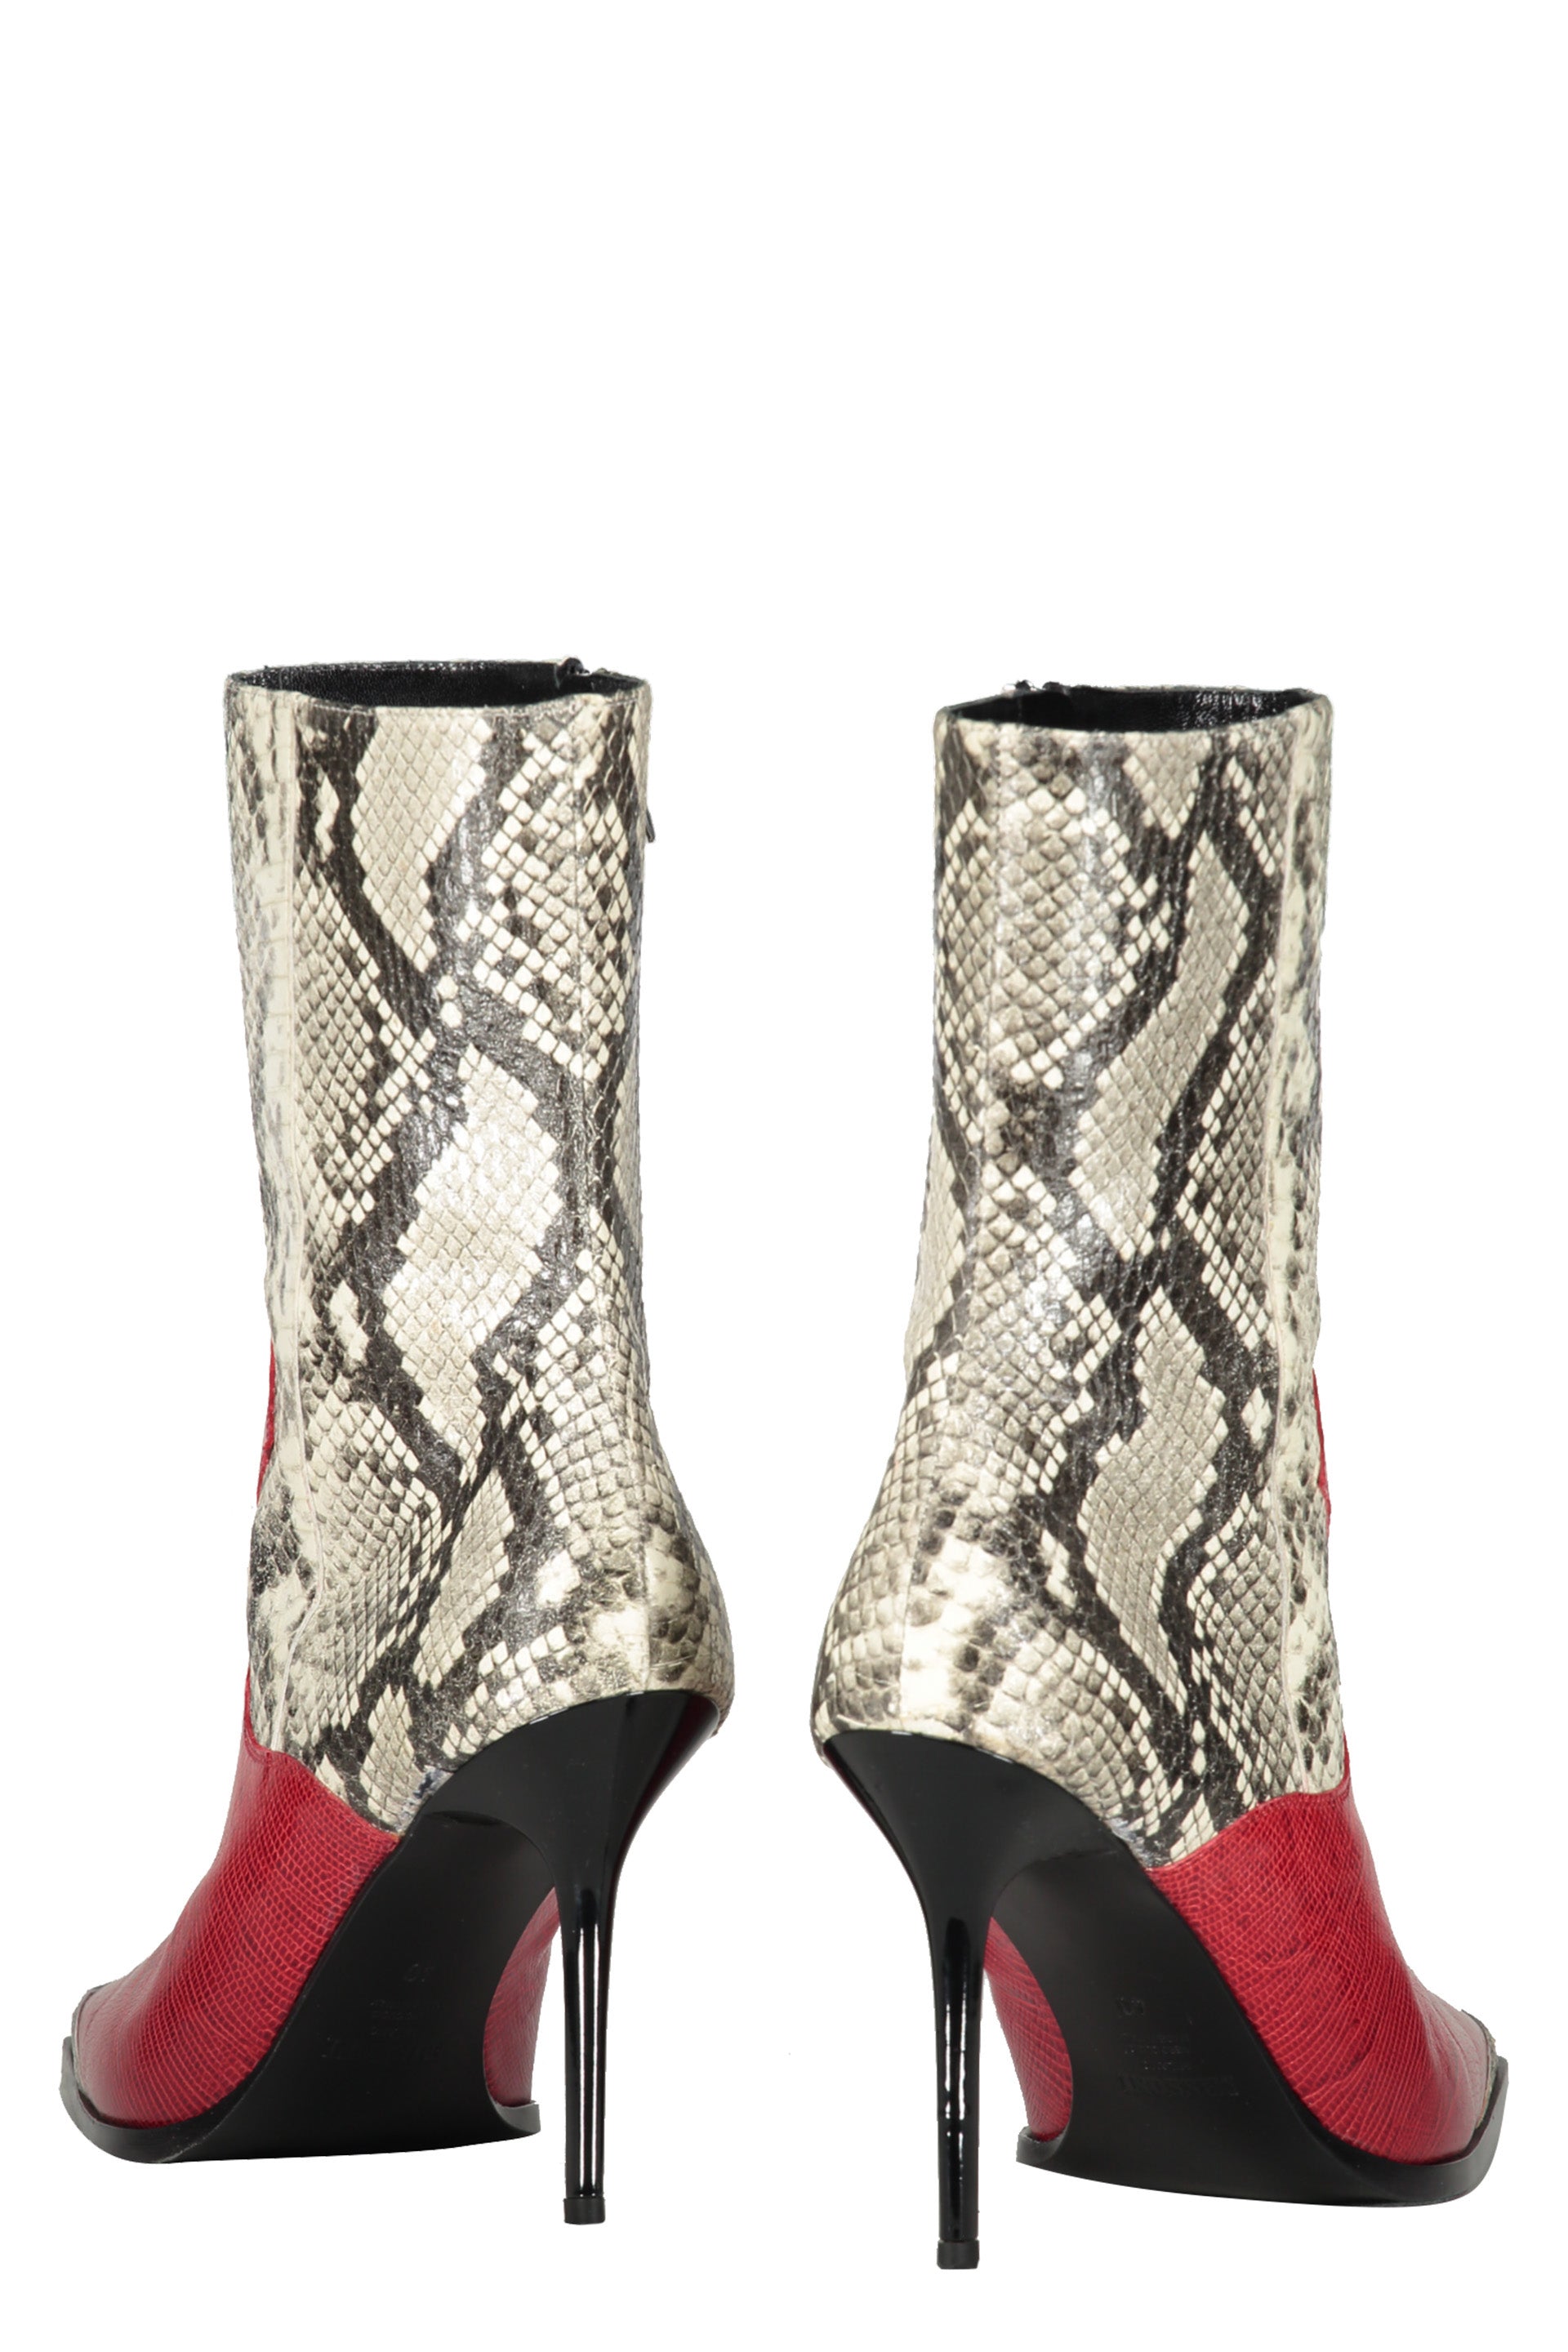 Snakeskin print heels ankle boots